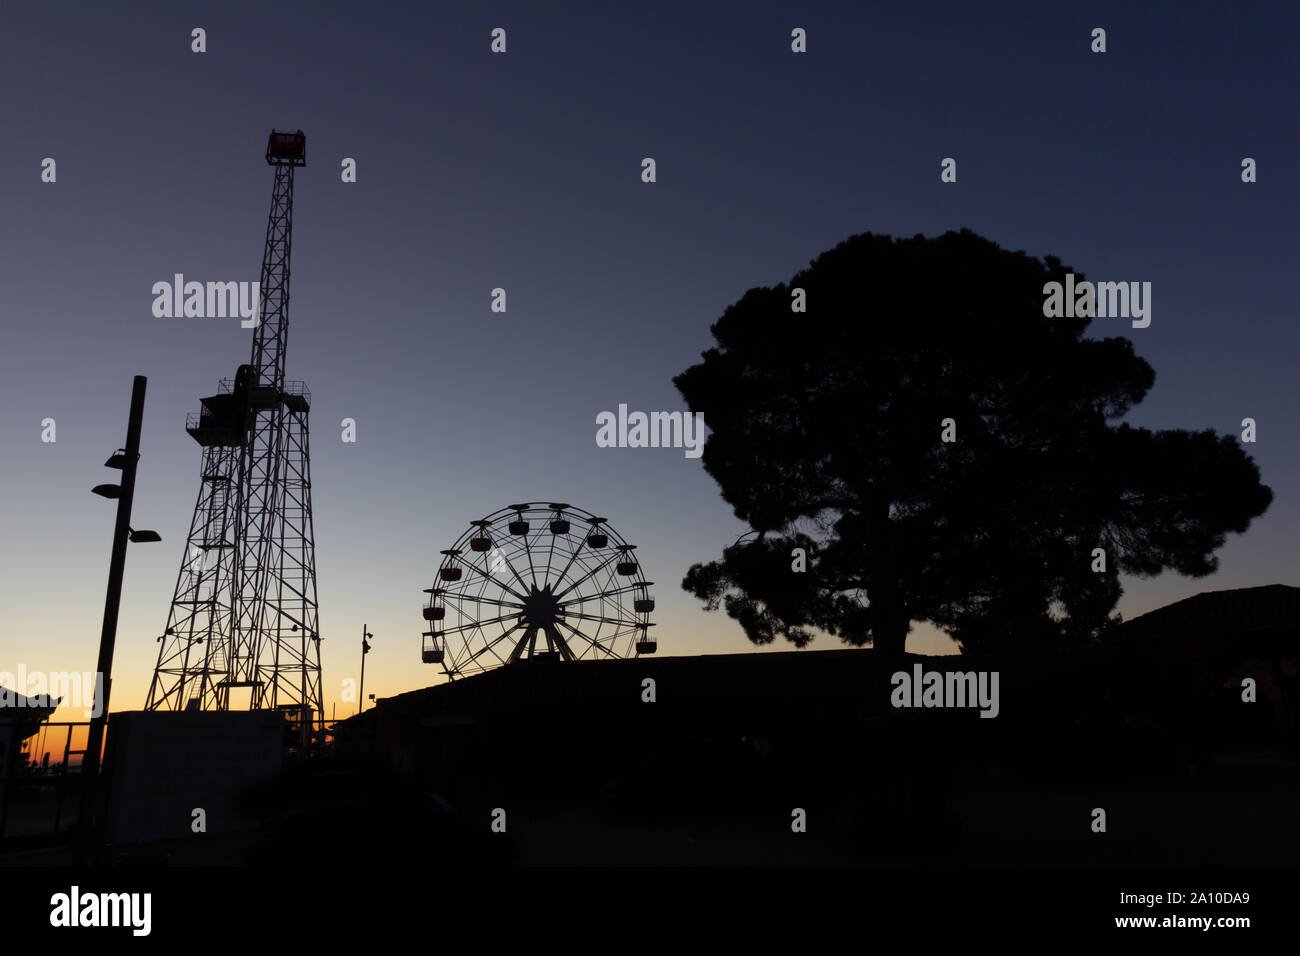 The Ferris whell at Tibidabo amusement park in silhouette at sunrise Stock Photo